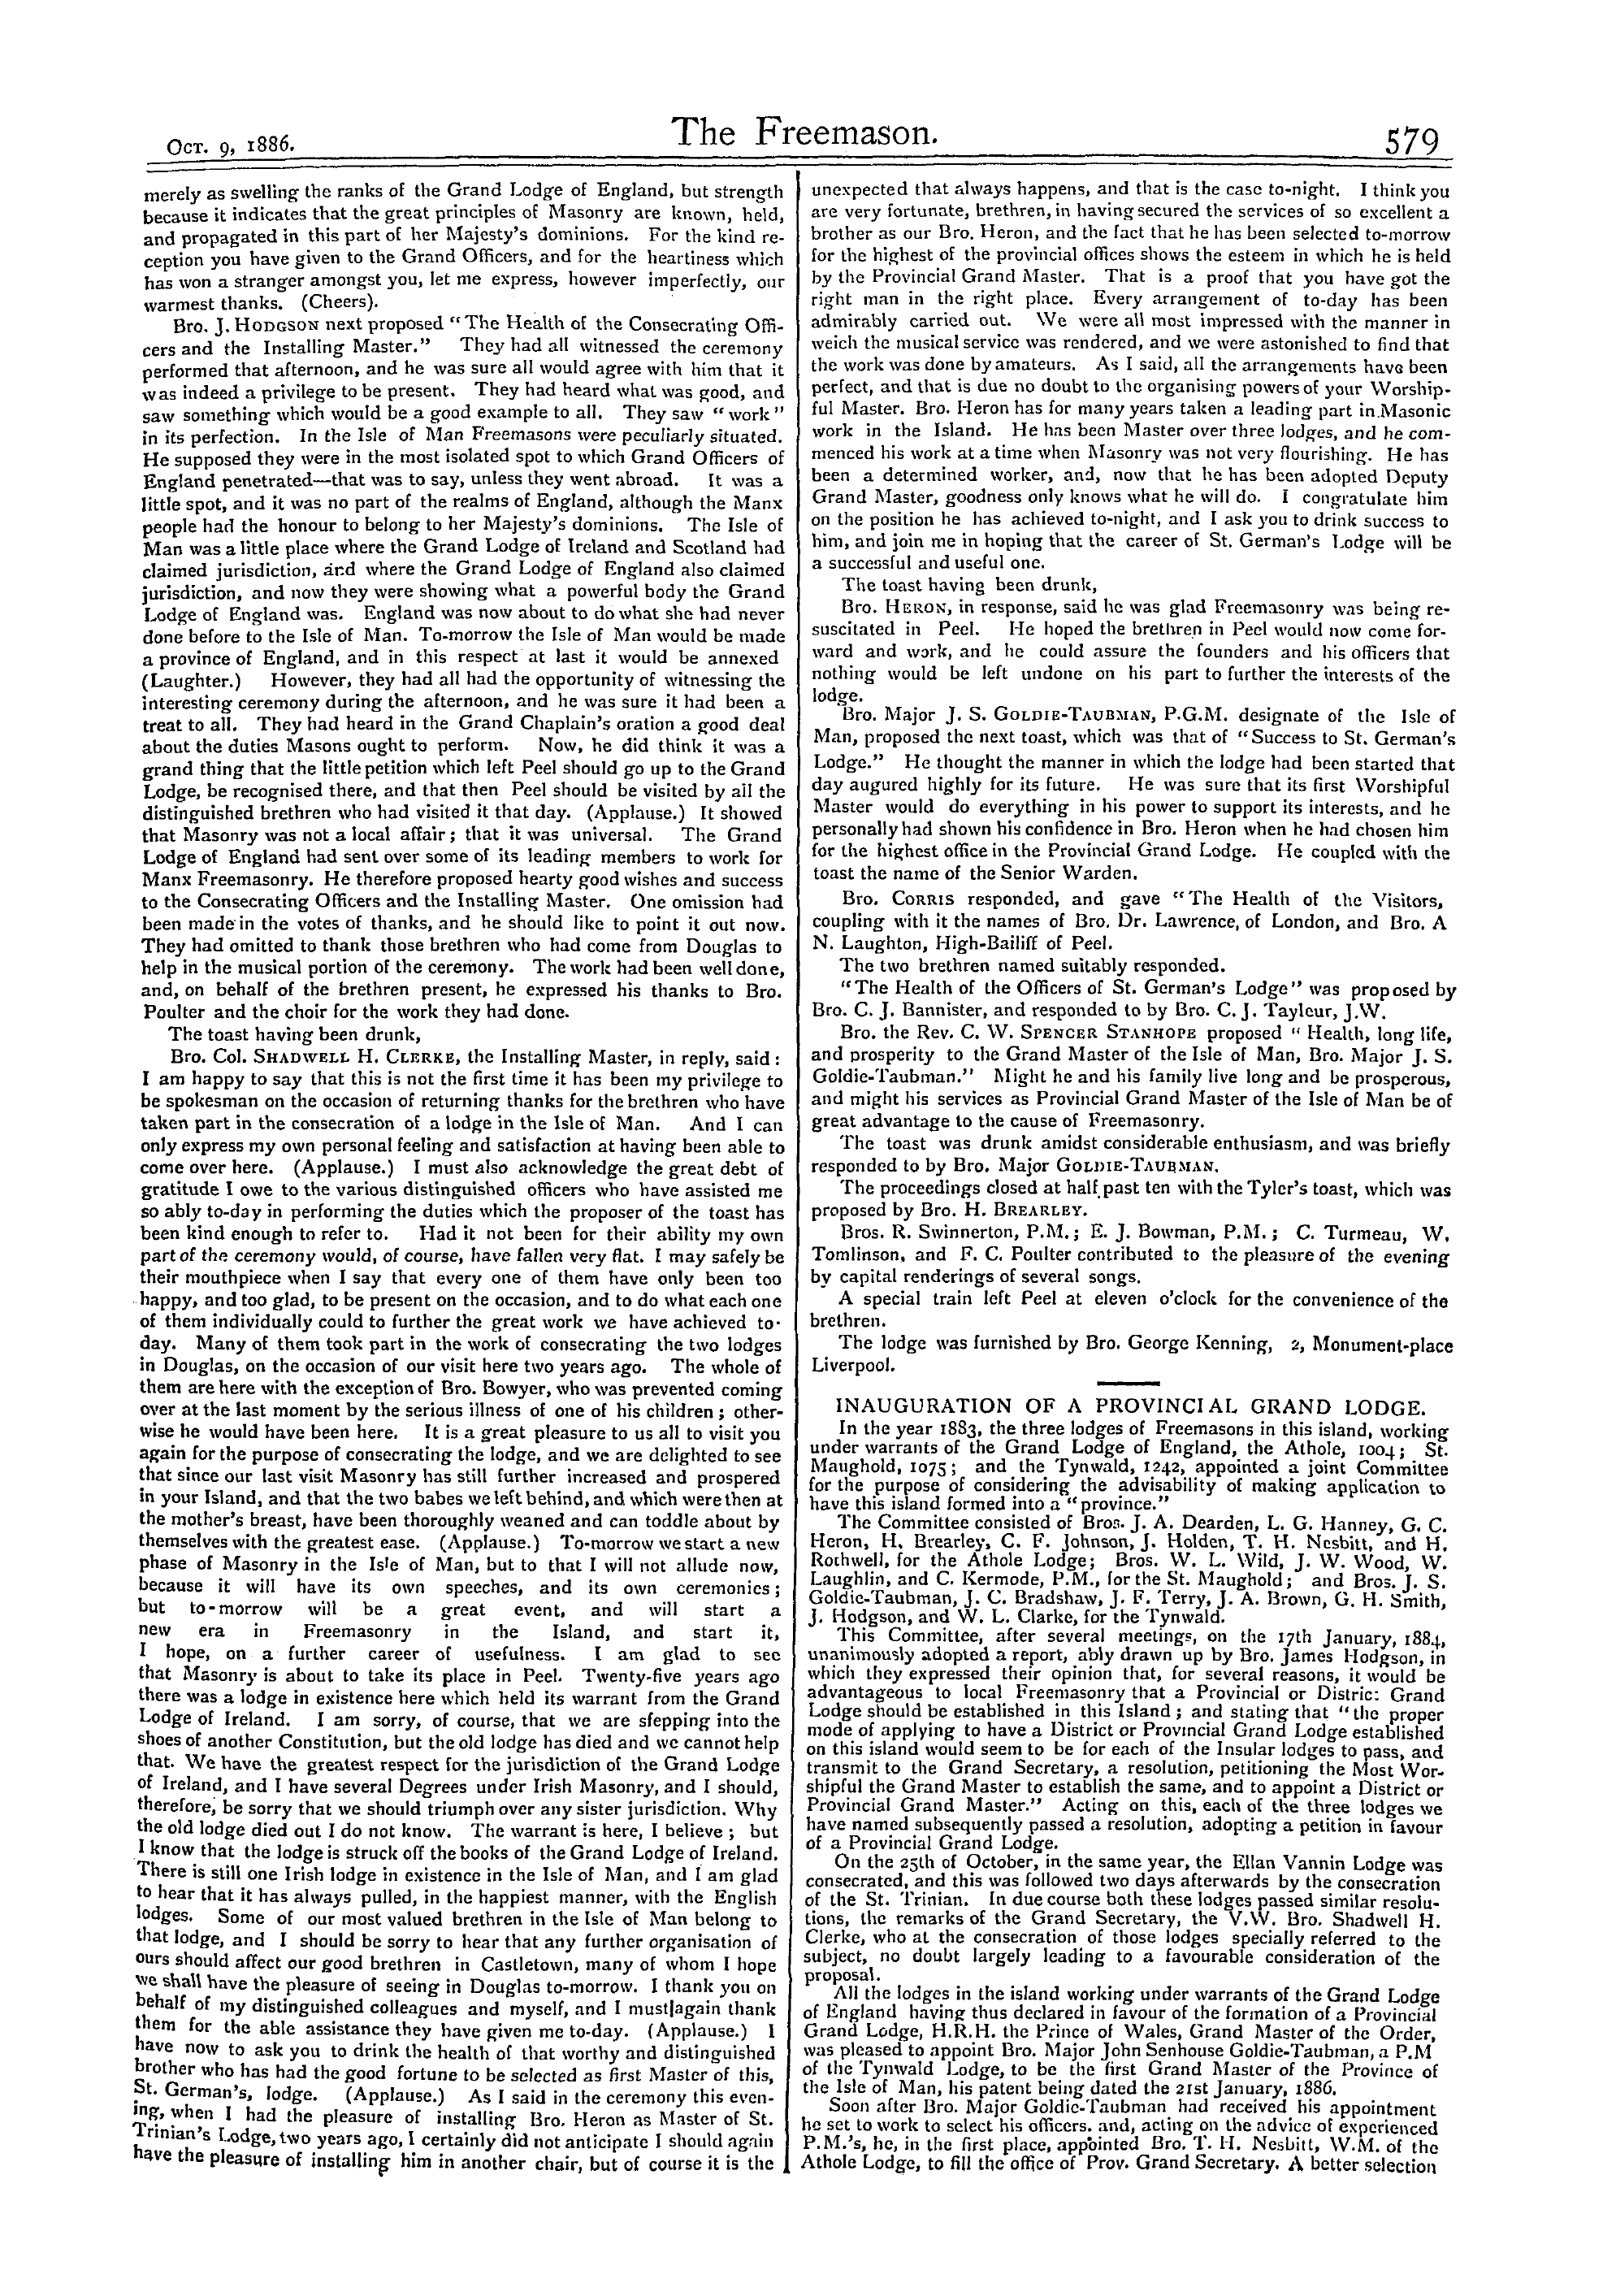 The Freemason: 1886-10-09: 3